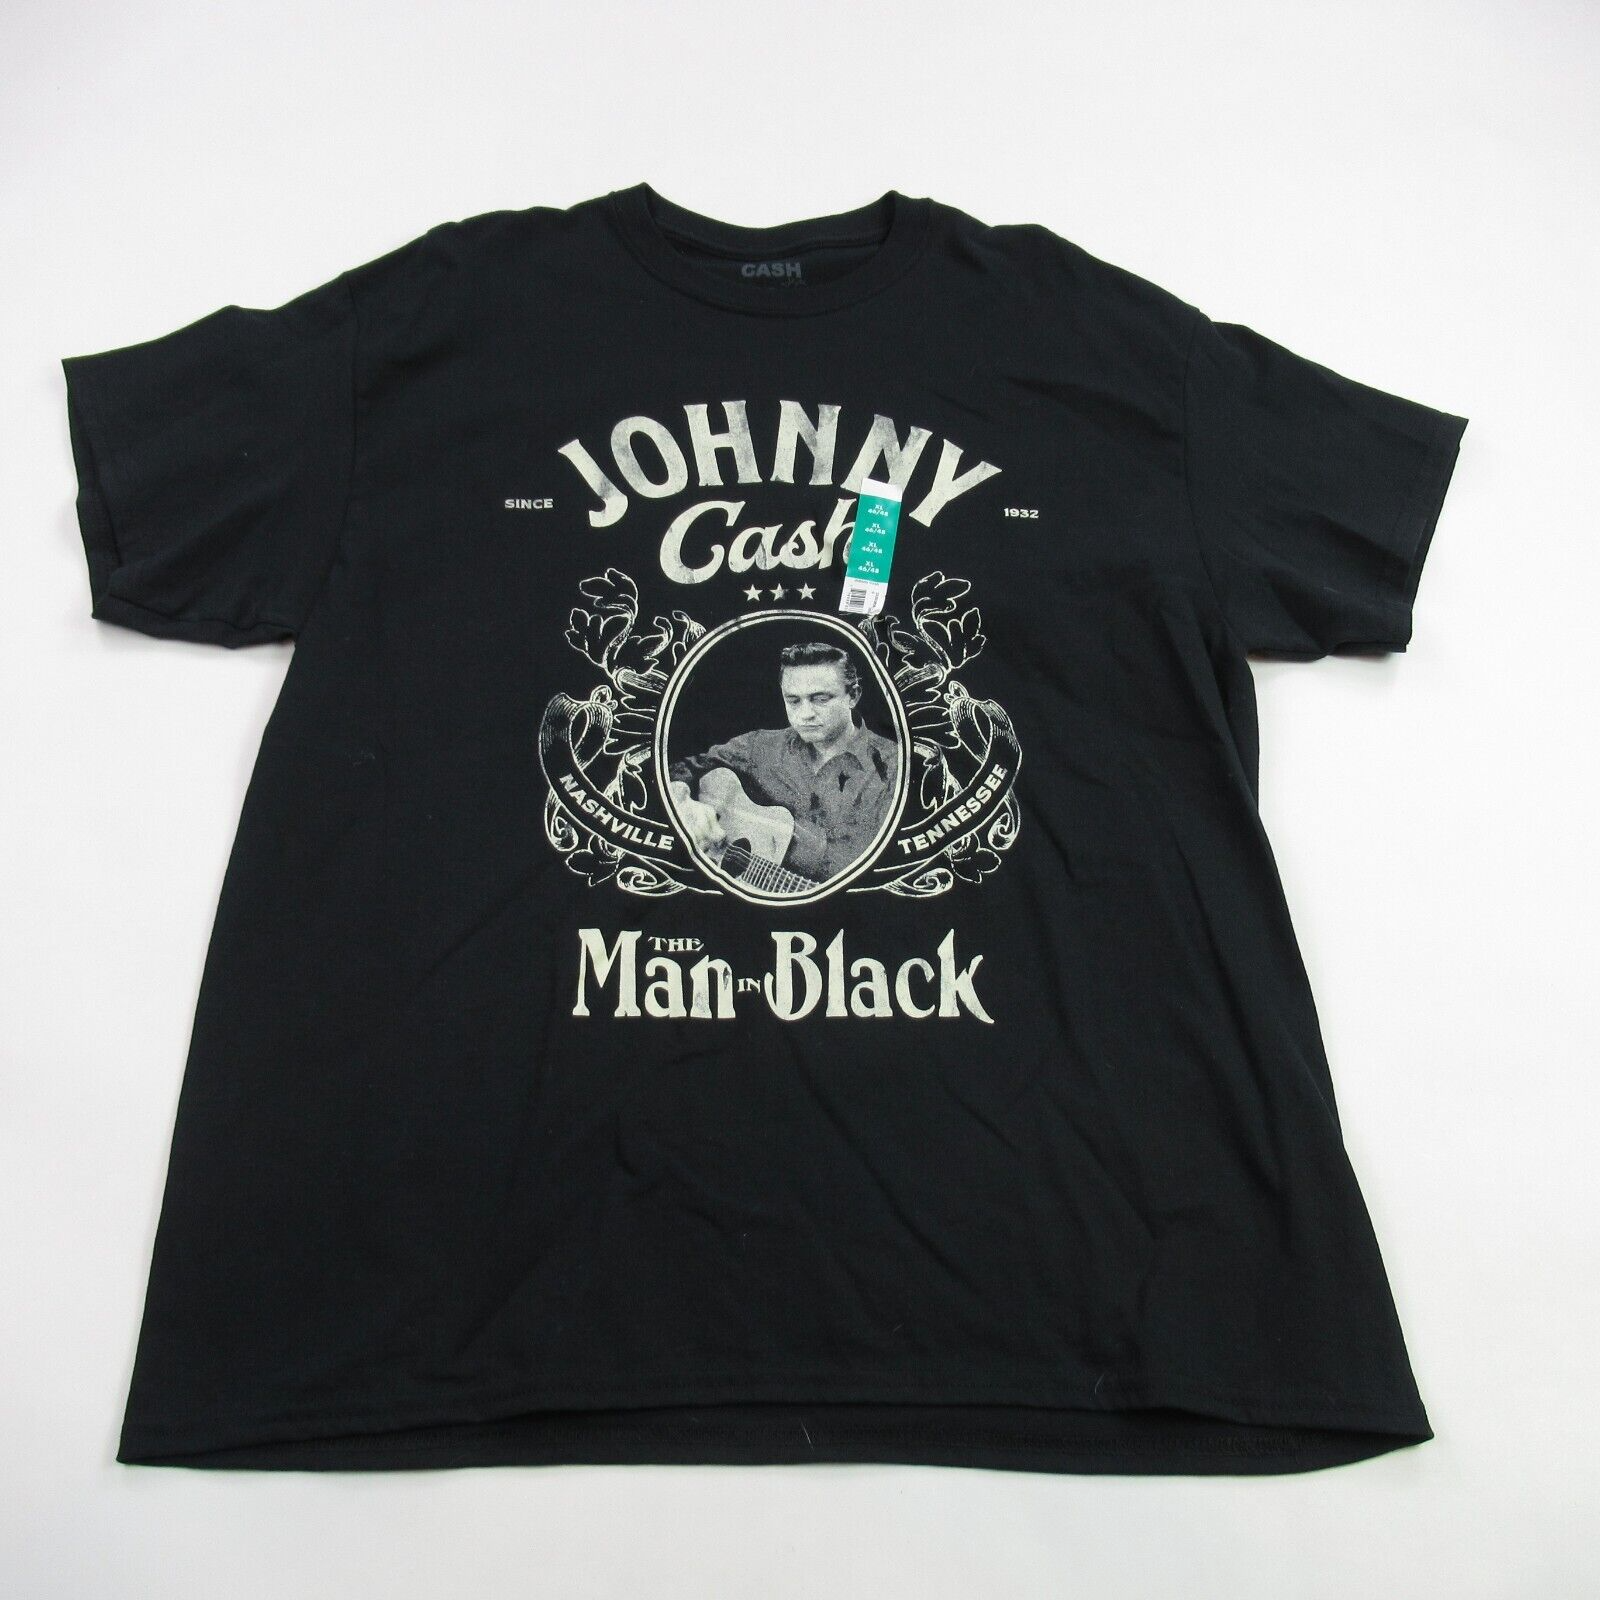 Johnny Cash Shirt Mens XL Short Sleeve Casual Concert Tour Man in Black